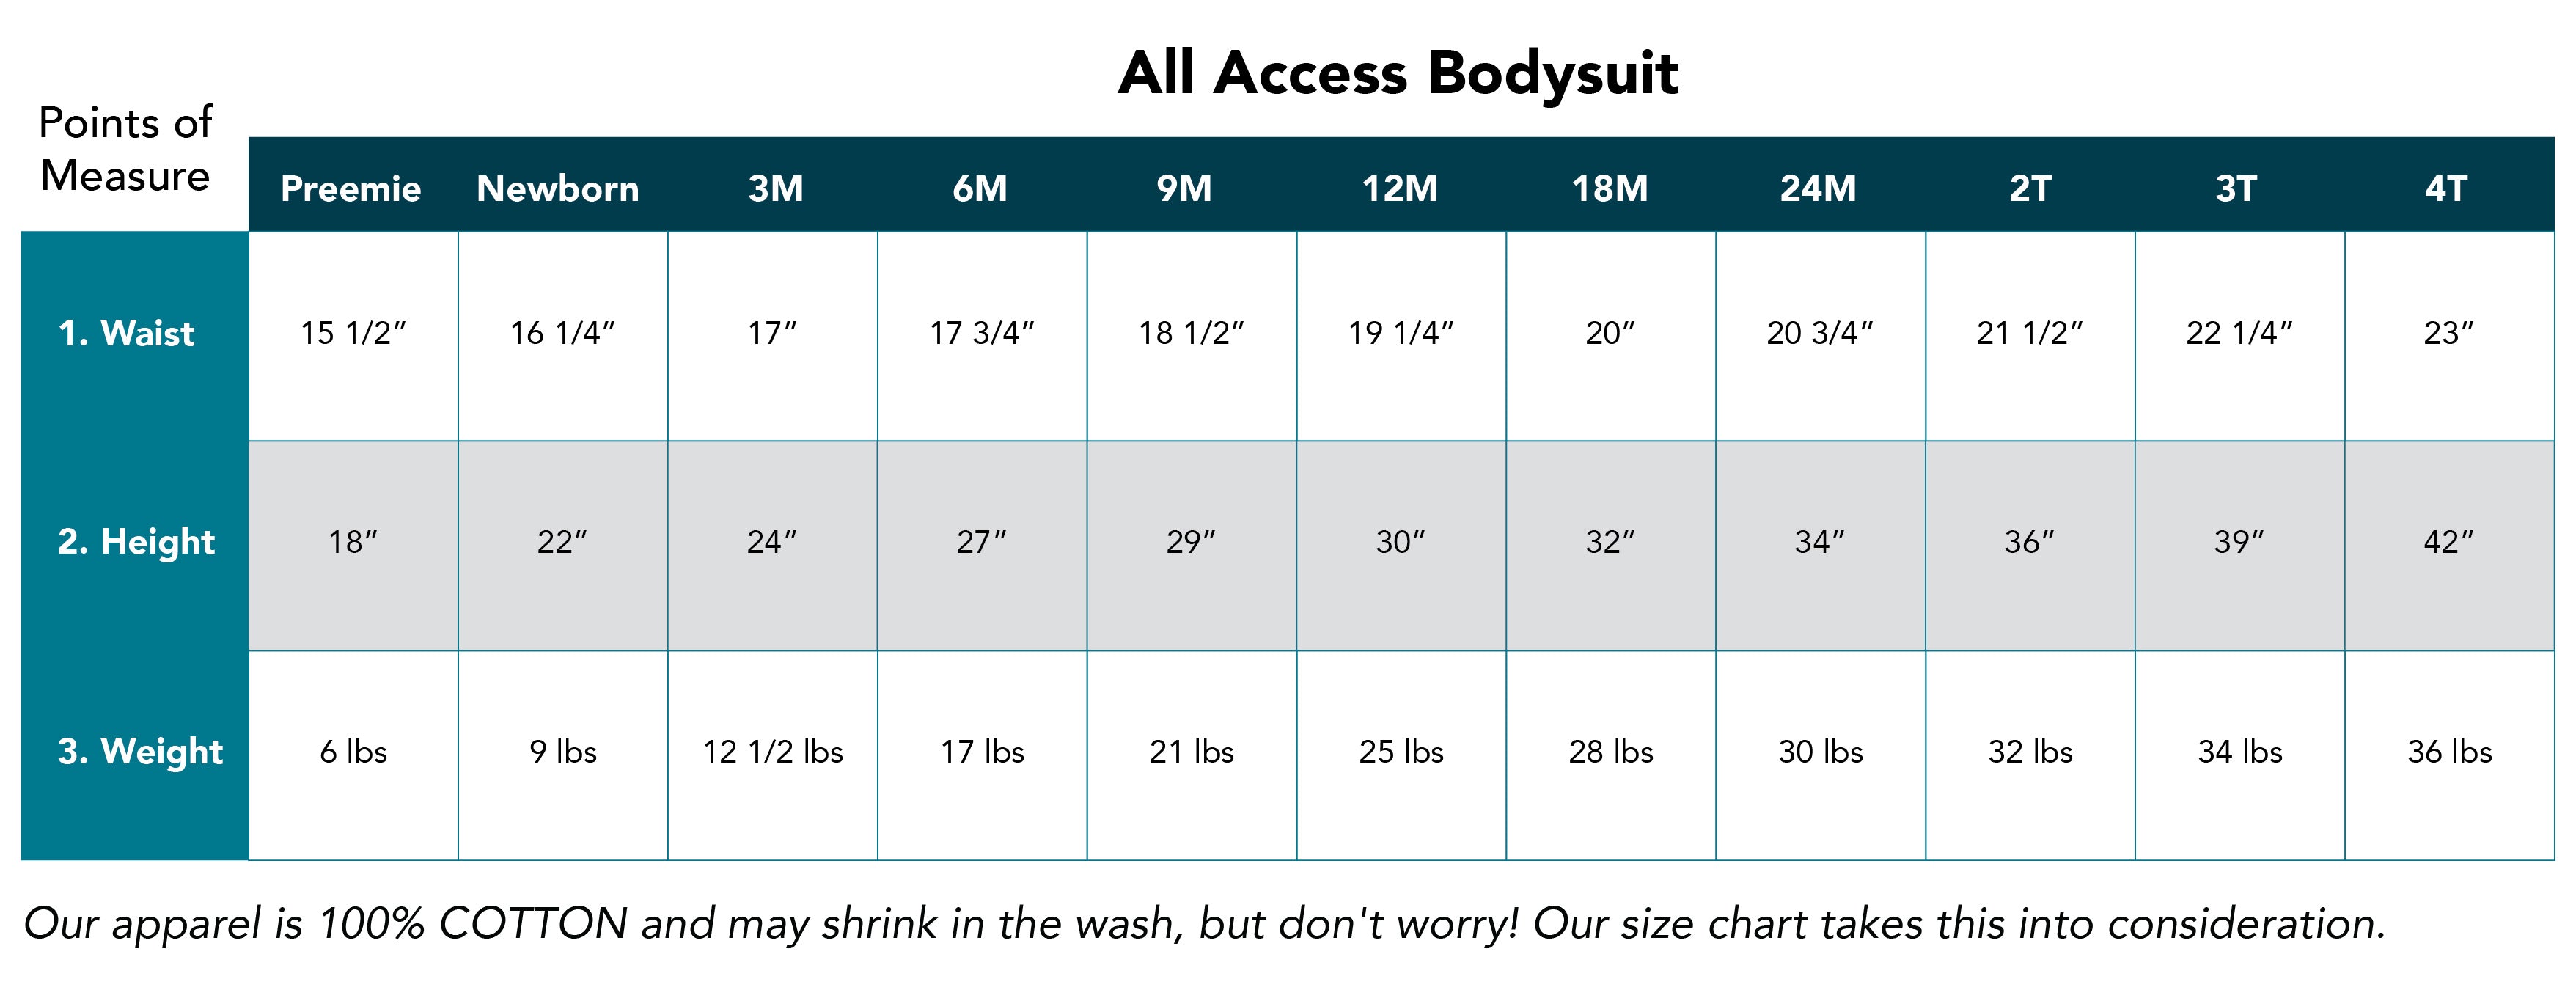 Pink All-Access Bodysuit | G-Tube, Catheter, NICU/PICU, Port-friendly adaptive clothing